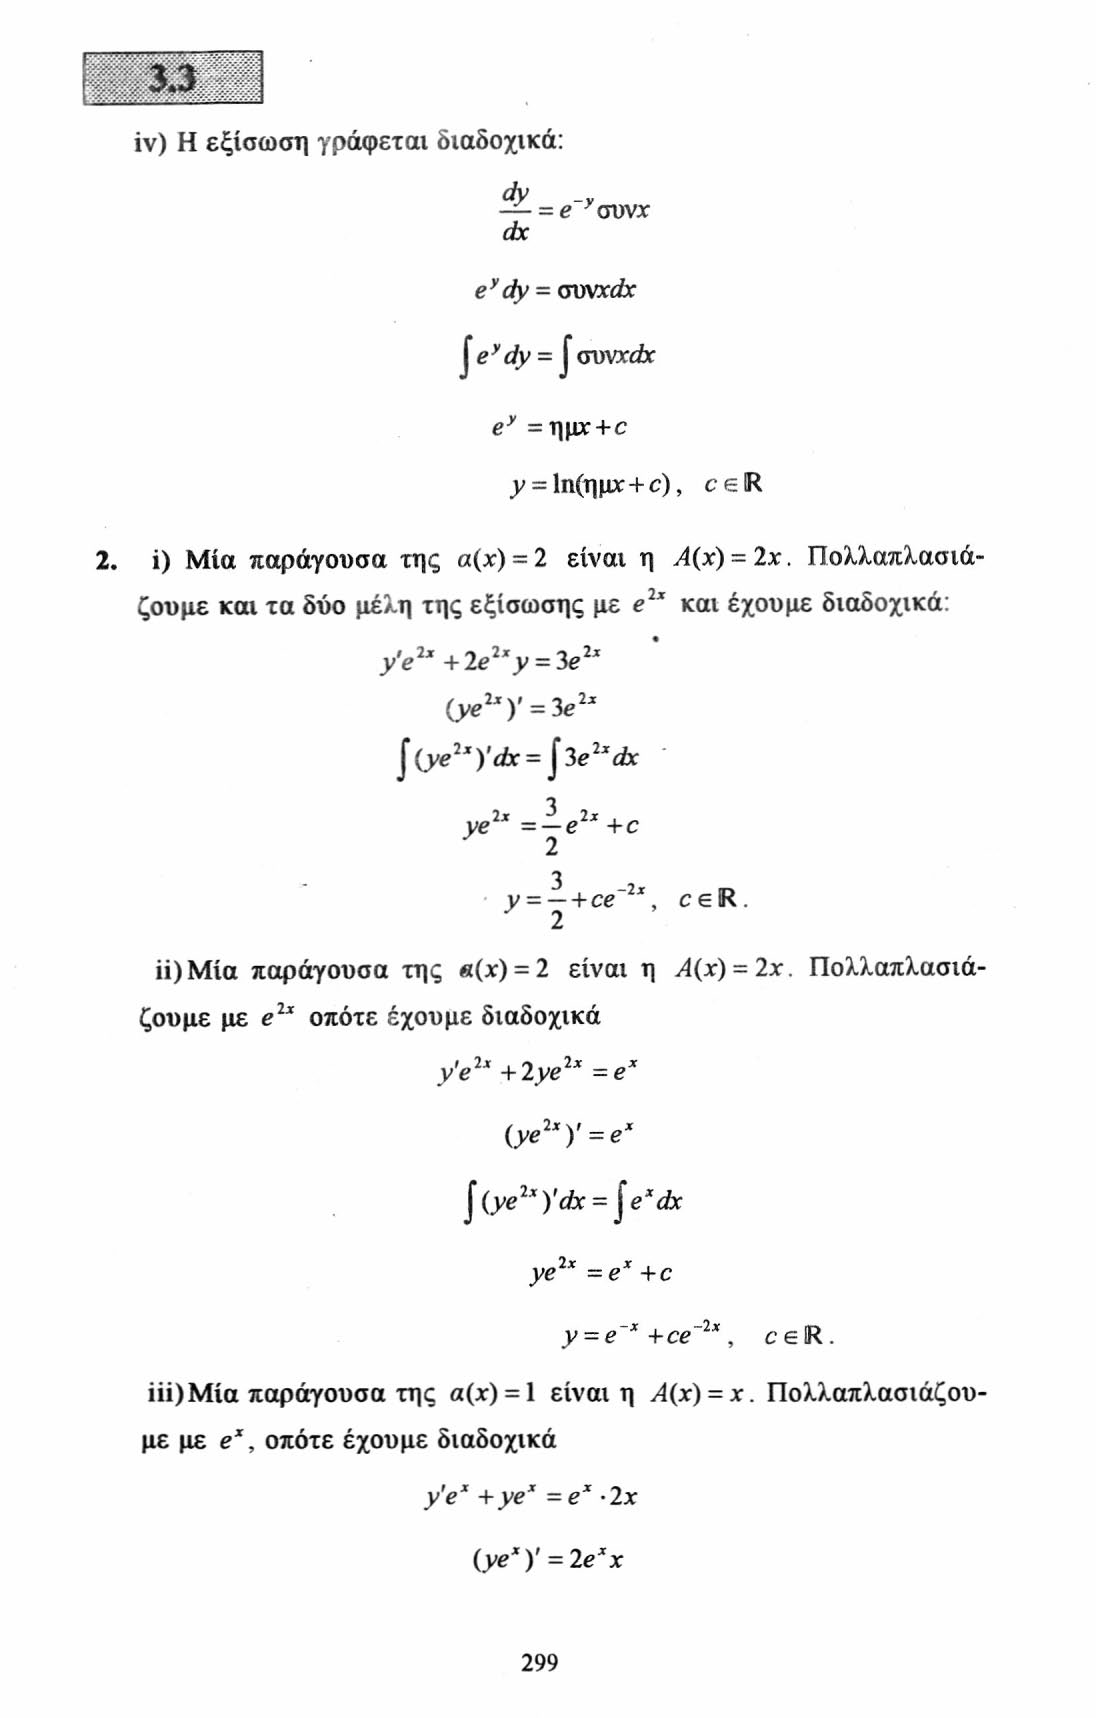 iv) Η εξίσωση γράφεται διαδοχικά: dy = e ^συνχ dx e"dy = συνχάχ j e y dy = j avvxdx e" = ημχτ+c ^ = 1η(ημχ + ο), cer. i) Μία παράγουσα της a(x) = είναι η Α(χ) = χ.